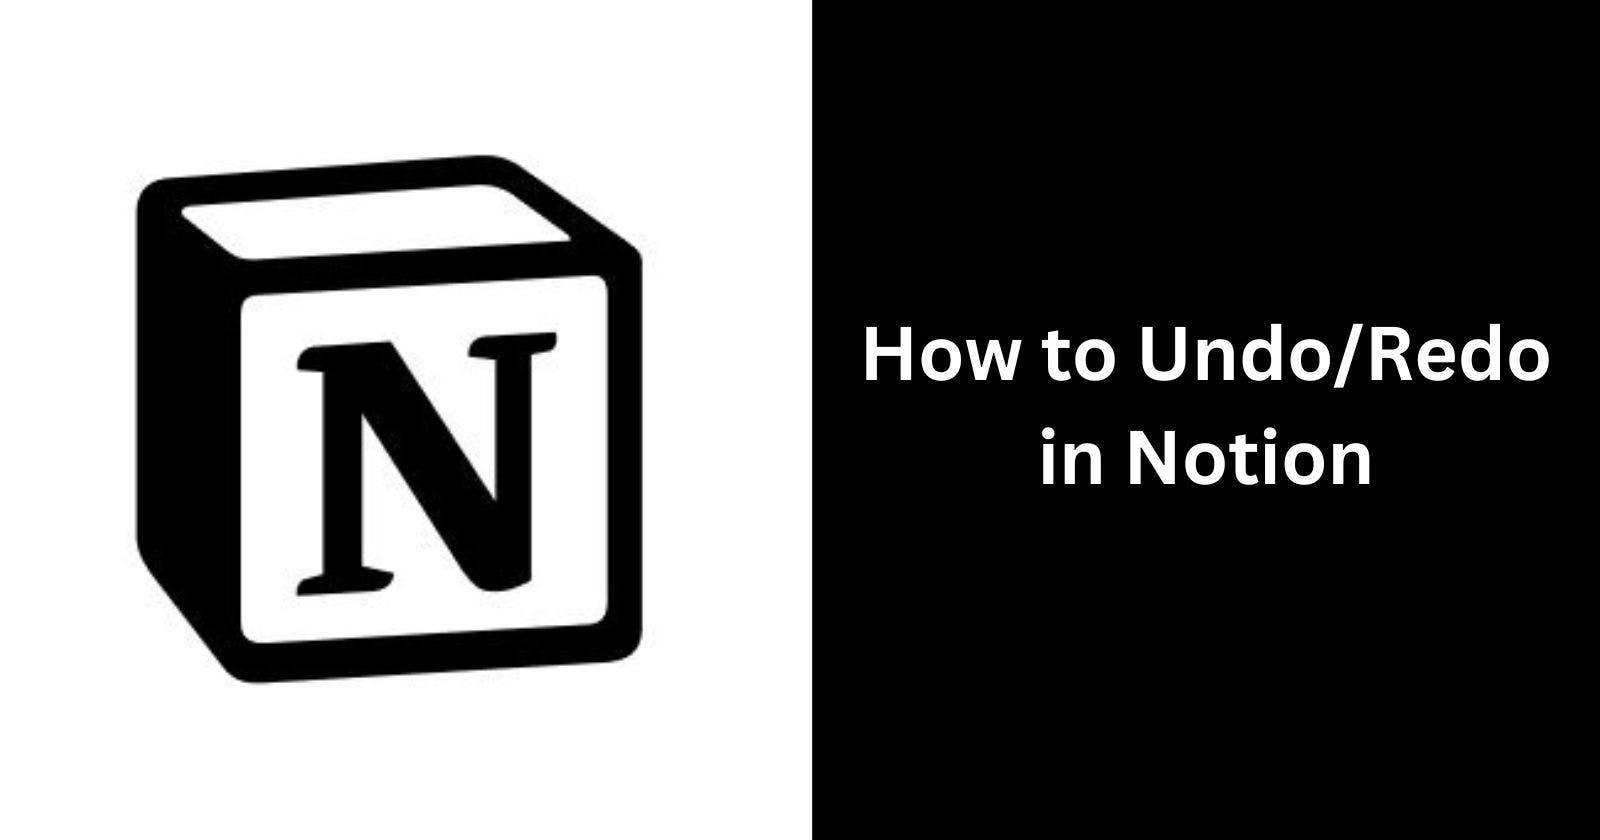 How to Undo/Redo in Notion